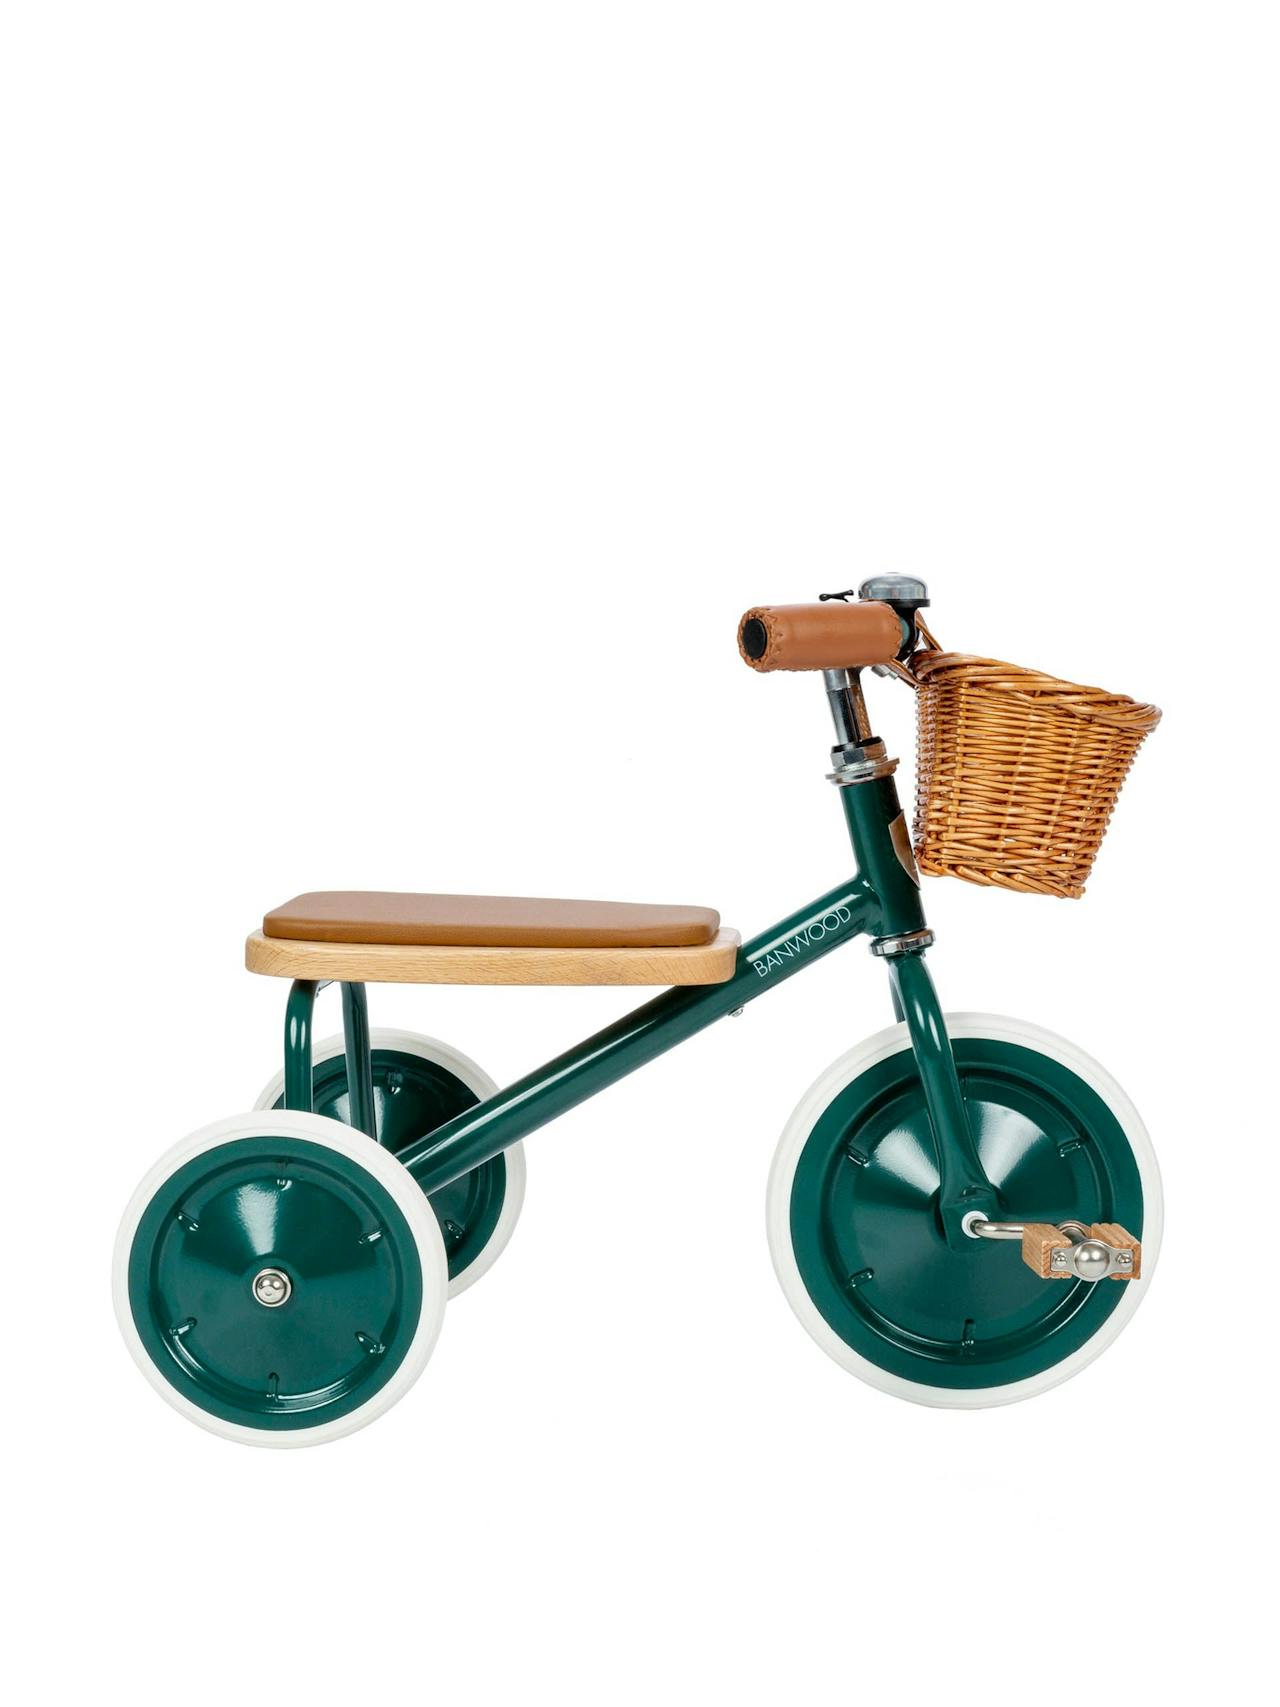 Banwood trike - racing green